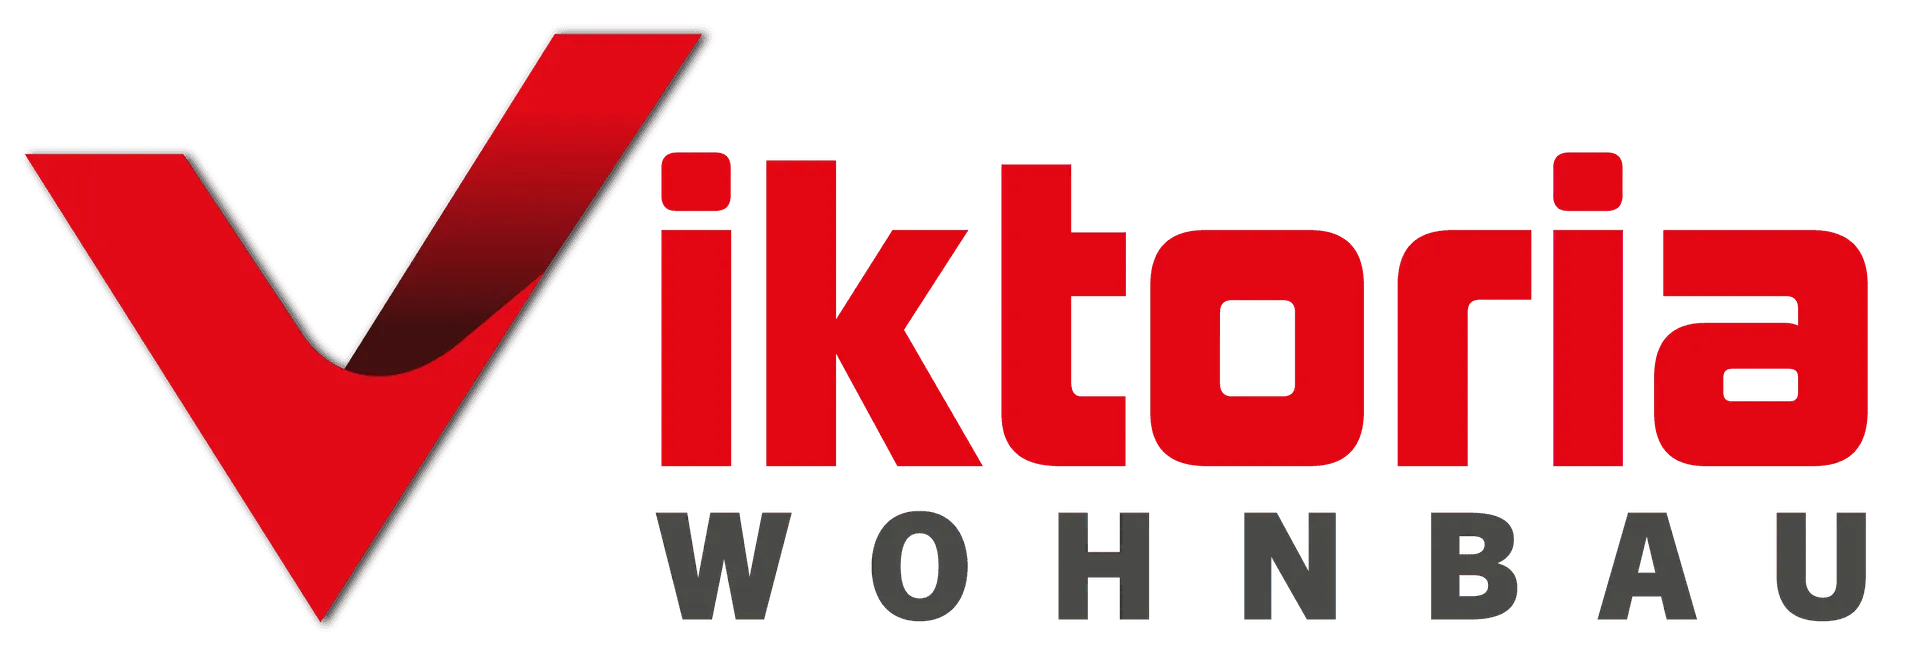 Makler Viktoria Wohnbau GmbH logo